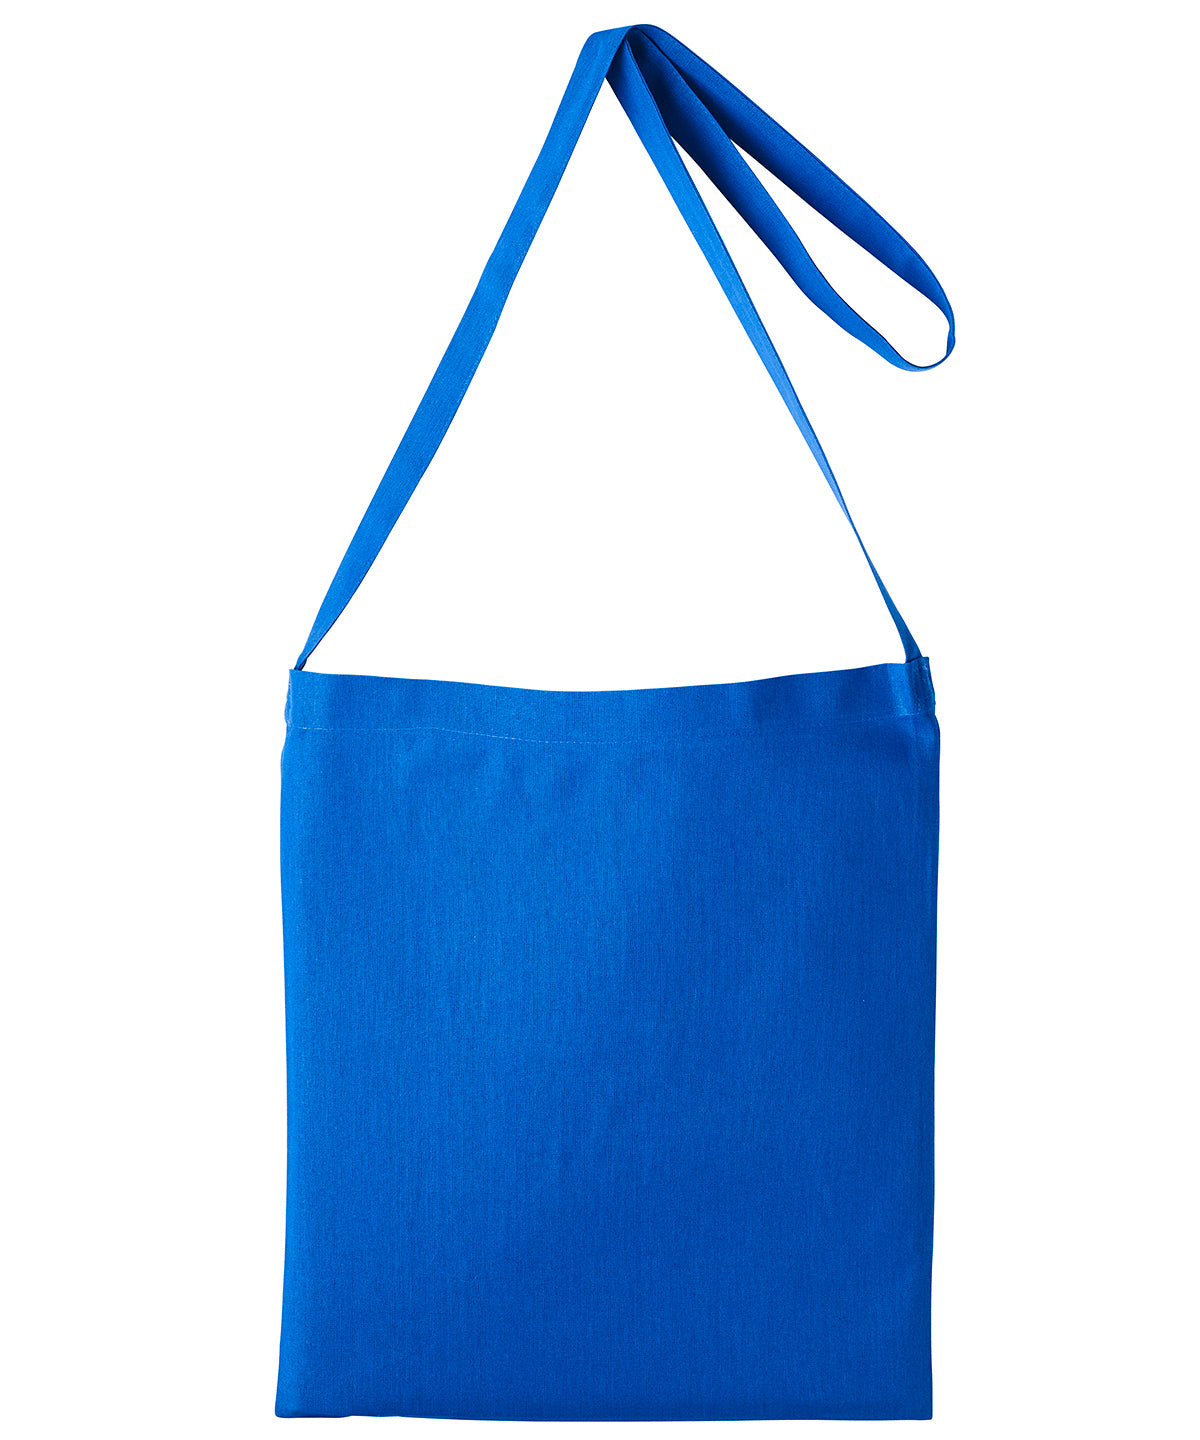 Töskur - One-handle Bag